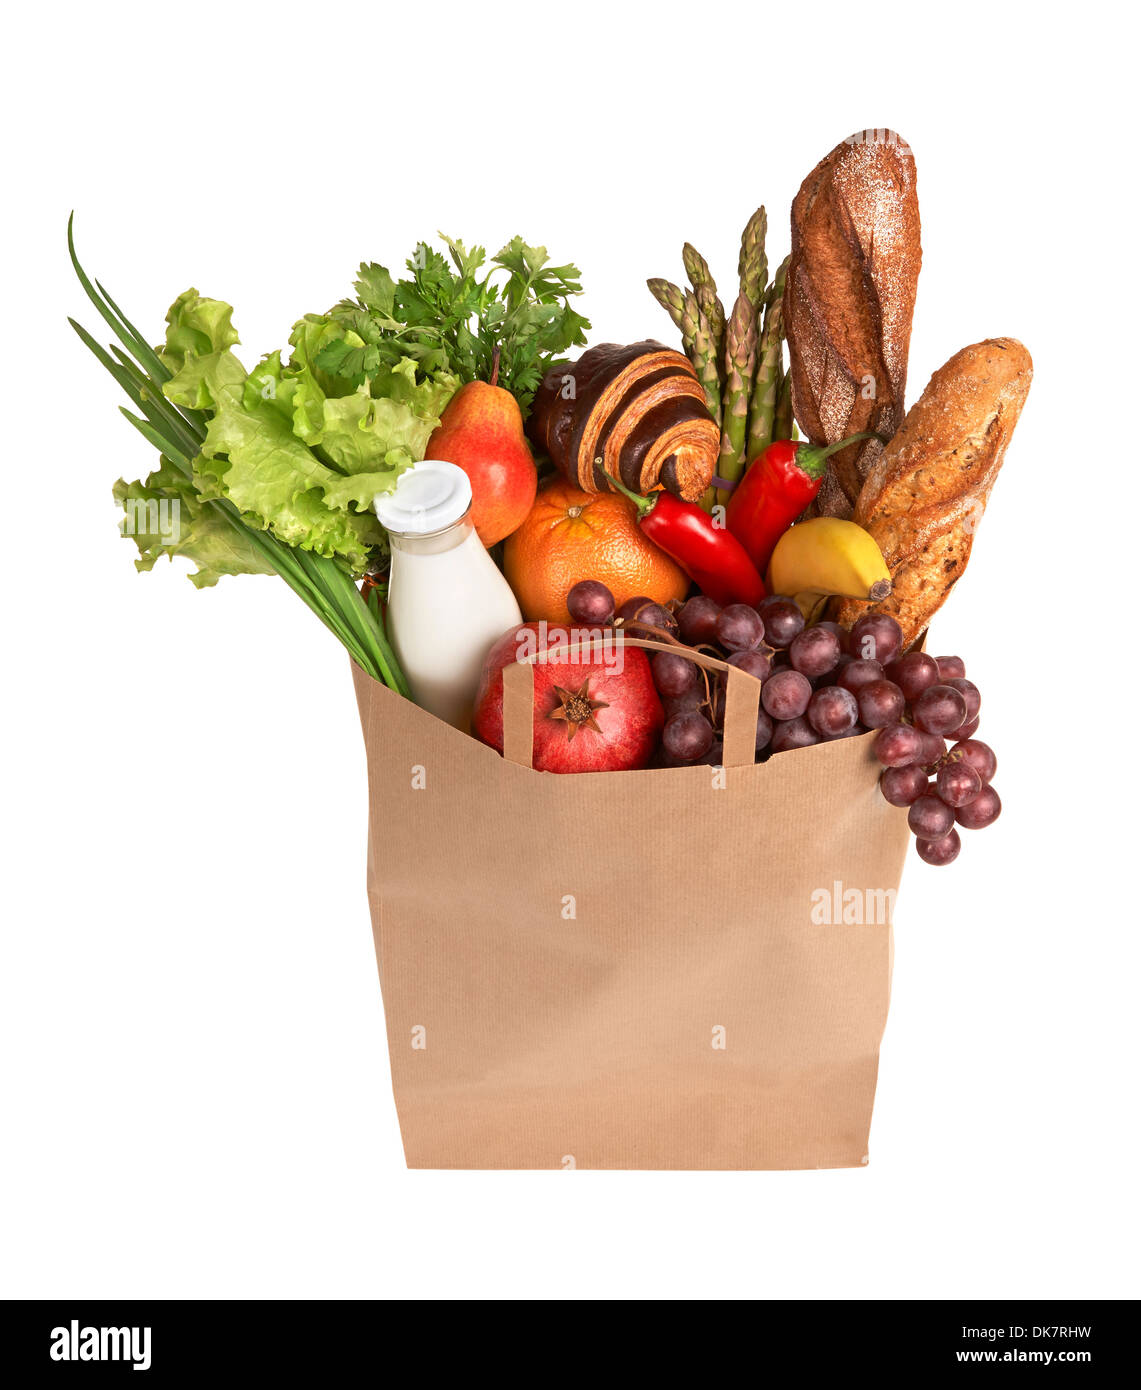 Bag full of healthy food Stock Photo - Alamy